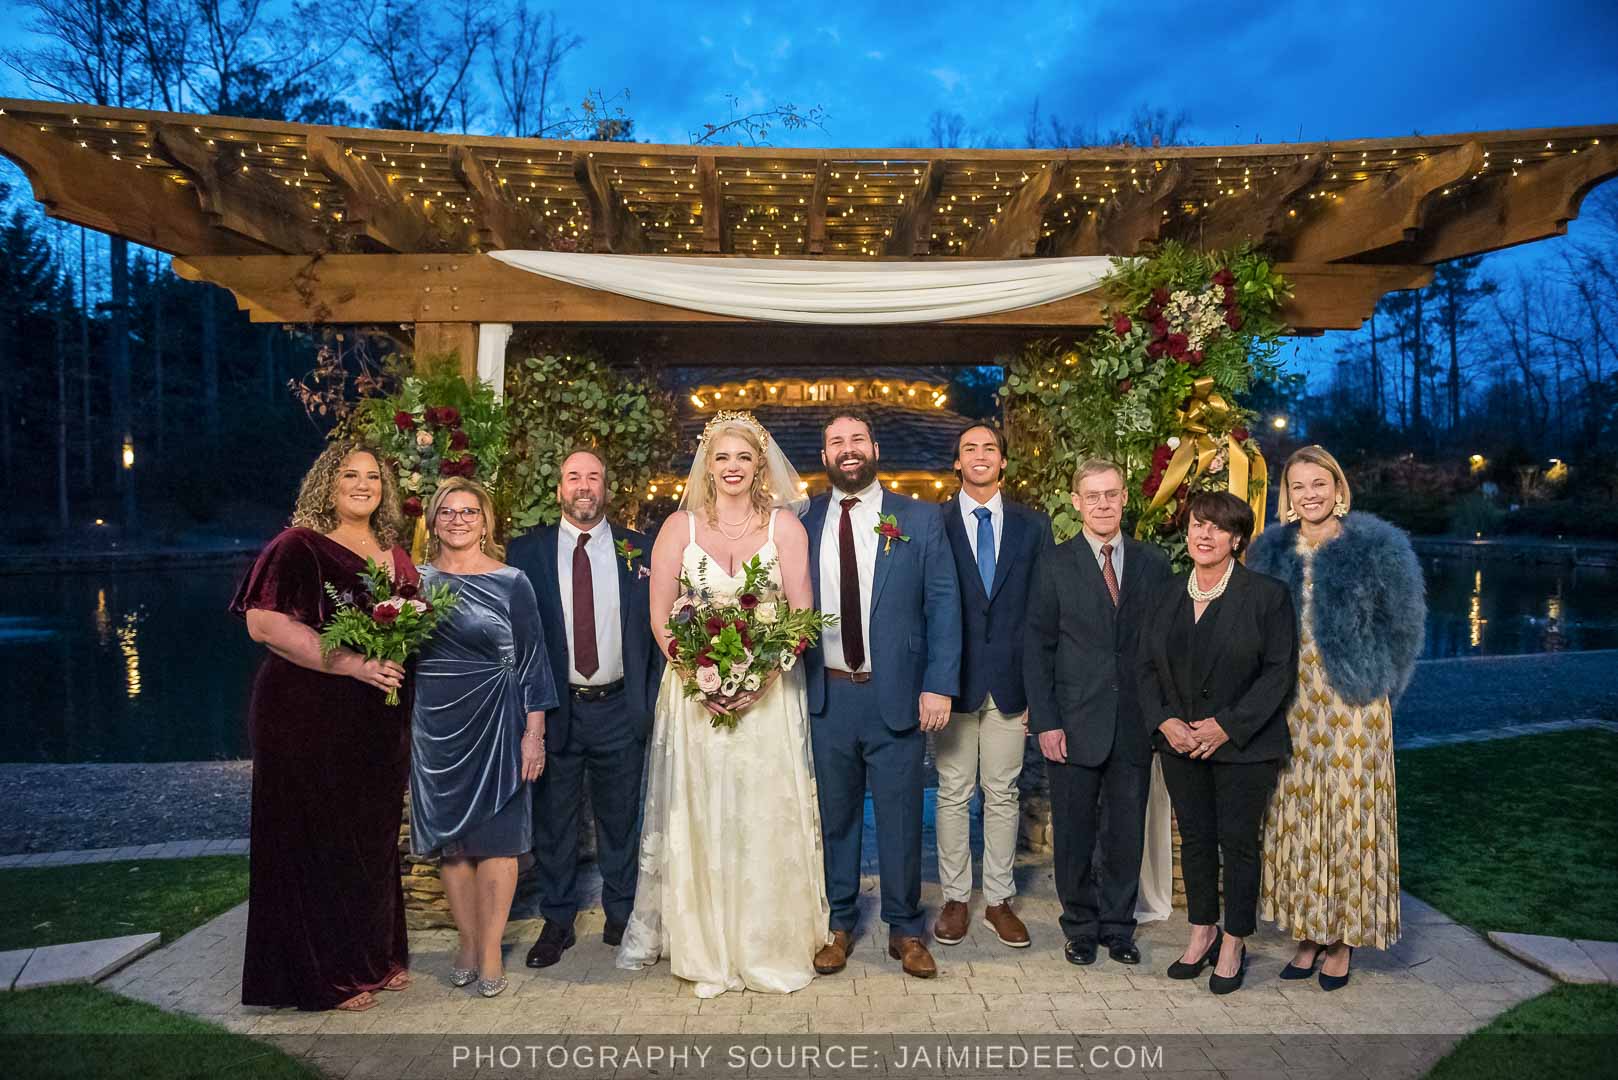 Rocky's Lake Estate Wedding Venue - family portrait with groom's family